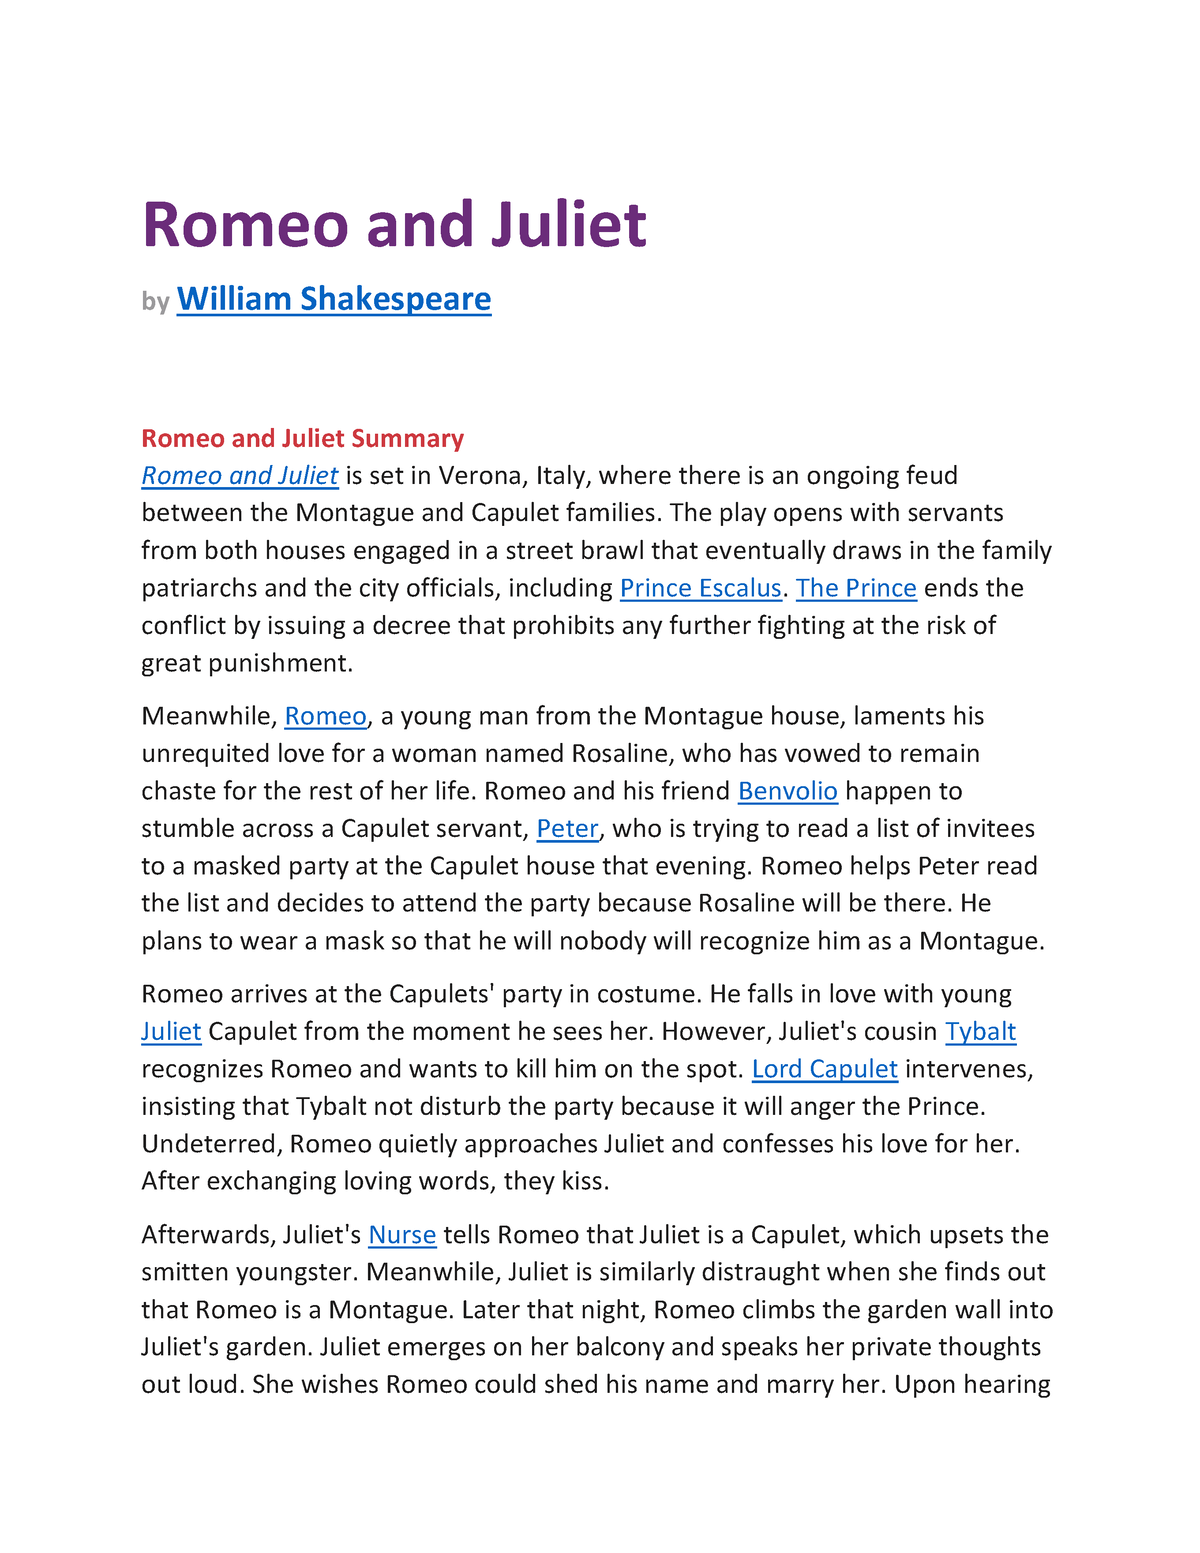 romeo and juliet short summary essay